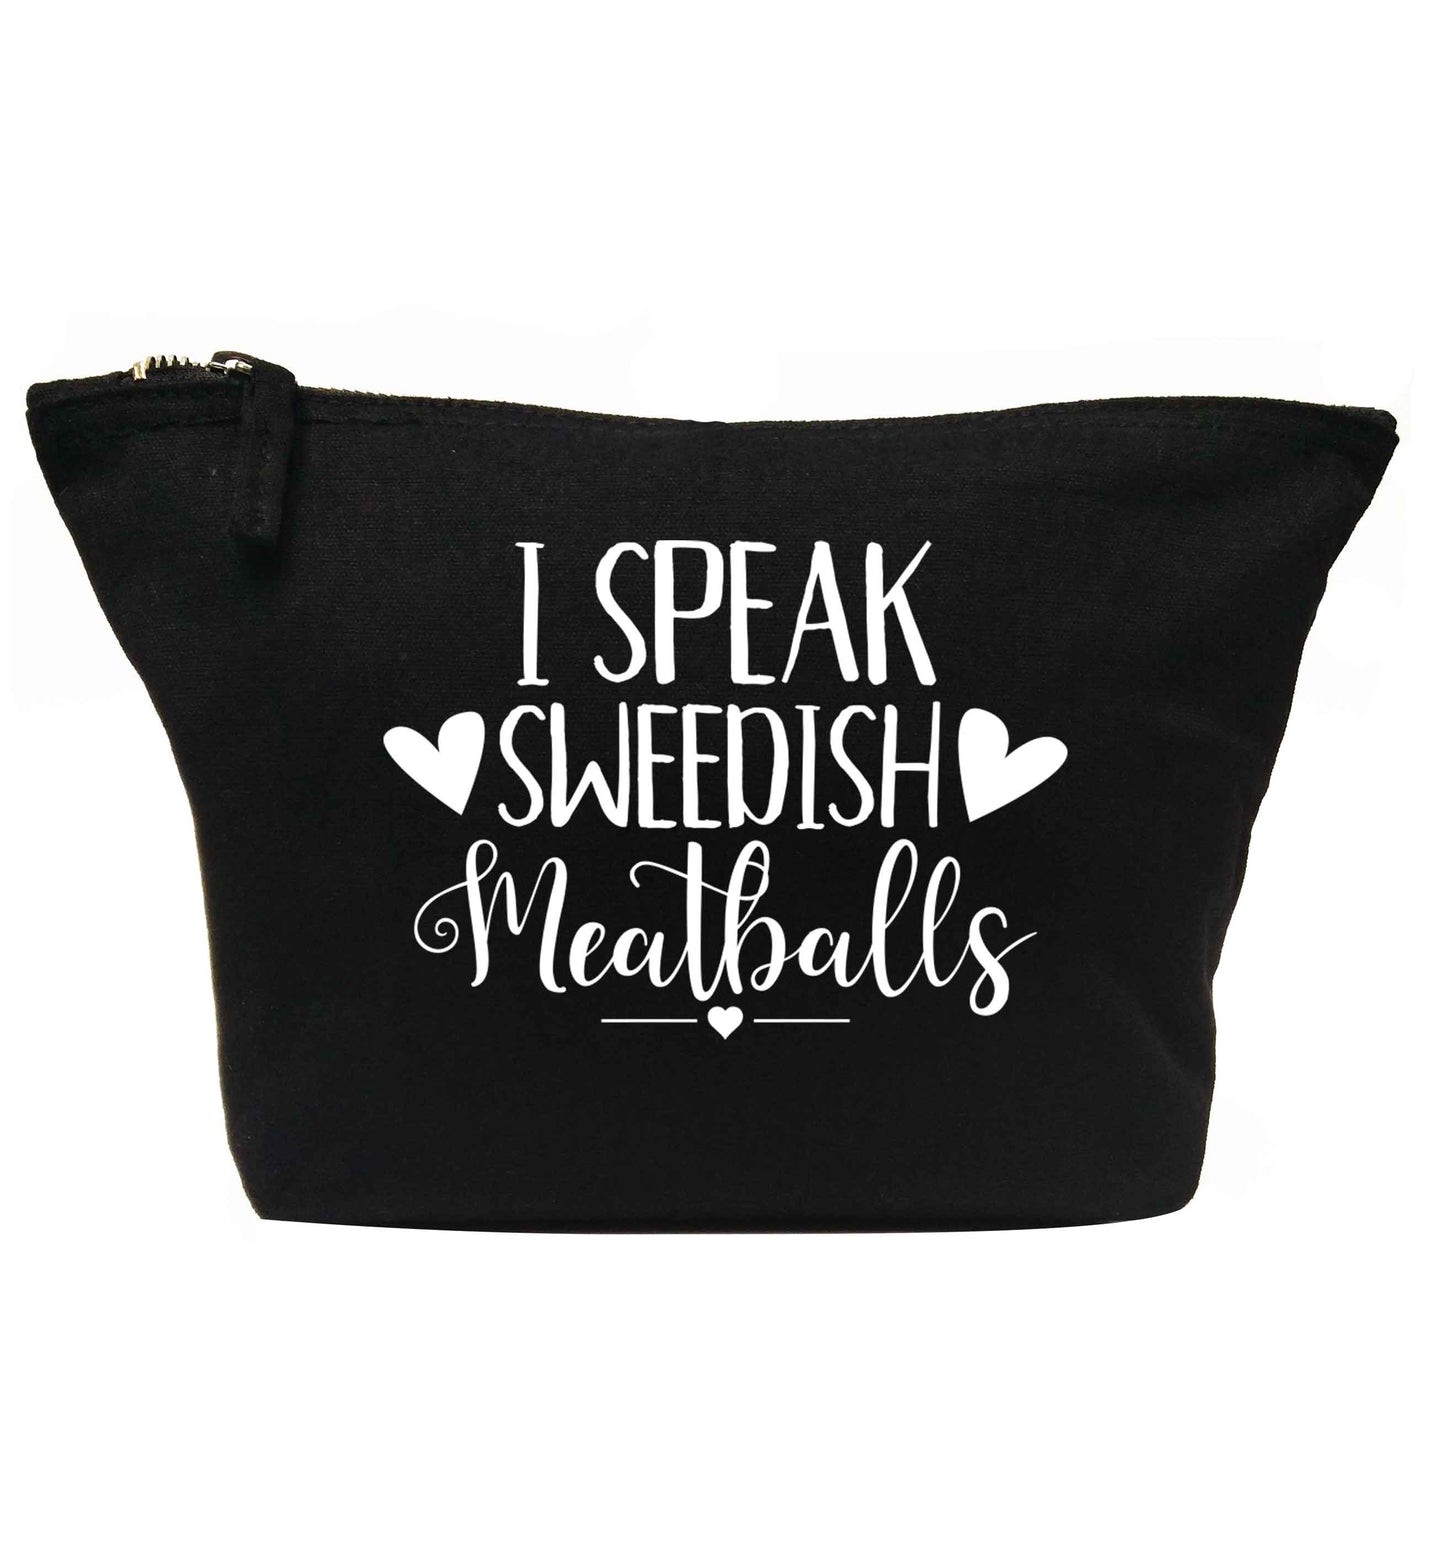 I speak sweedish...meatballs | makeup / wash bag